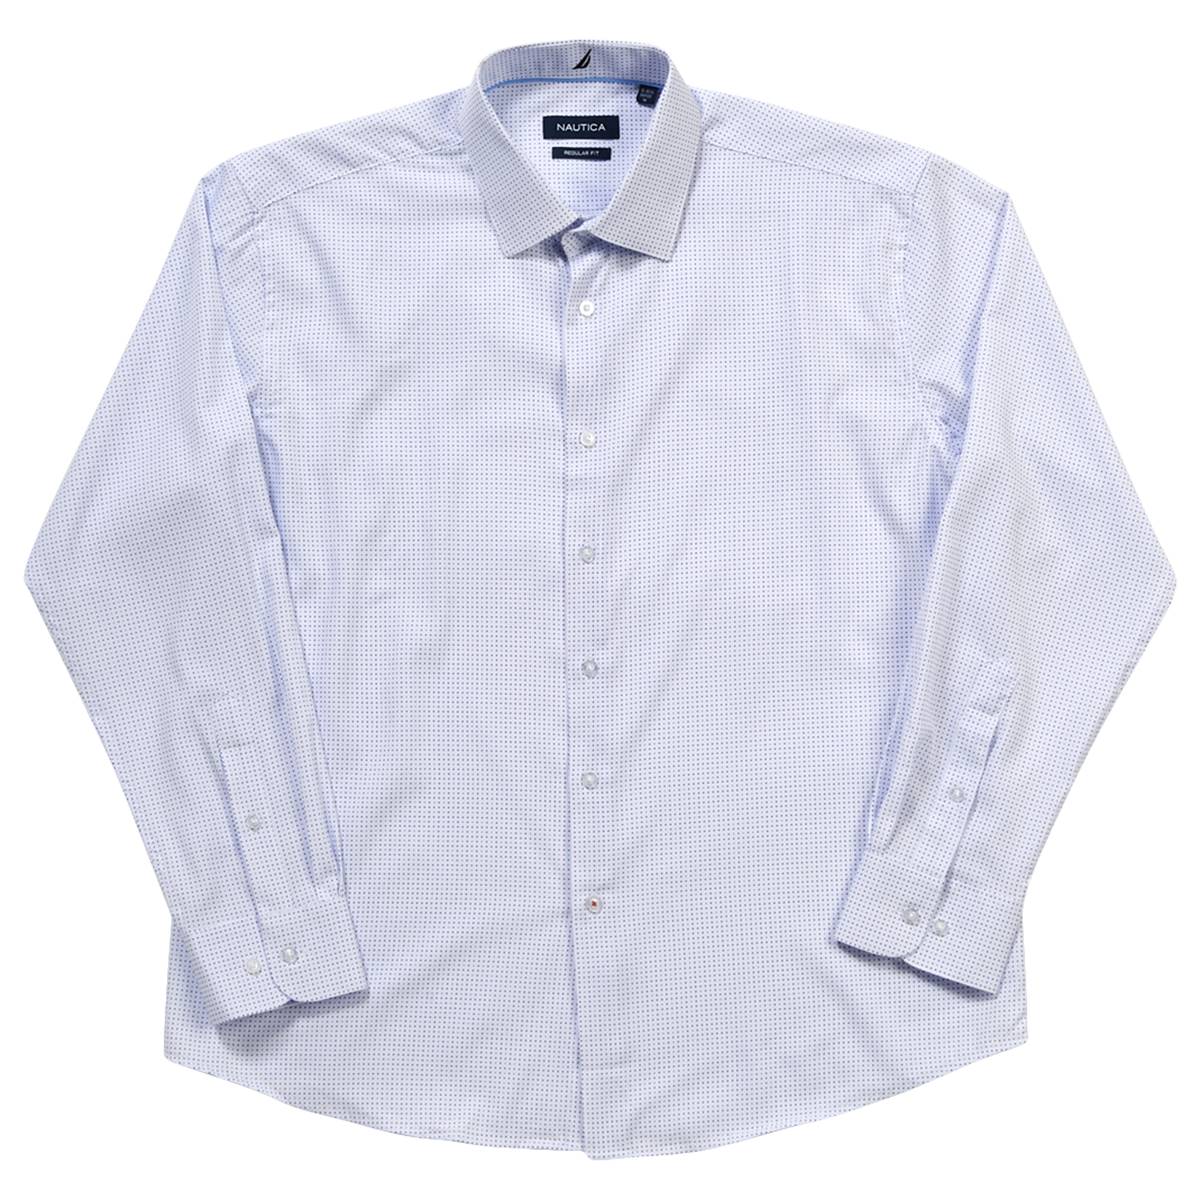 Mens Nautica Regular Fit Dress Shirt - White/Light Blue/Navy